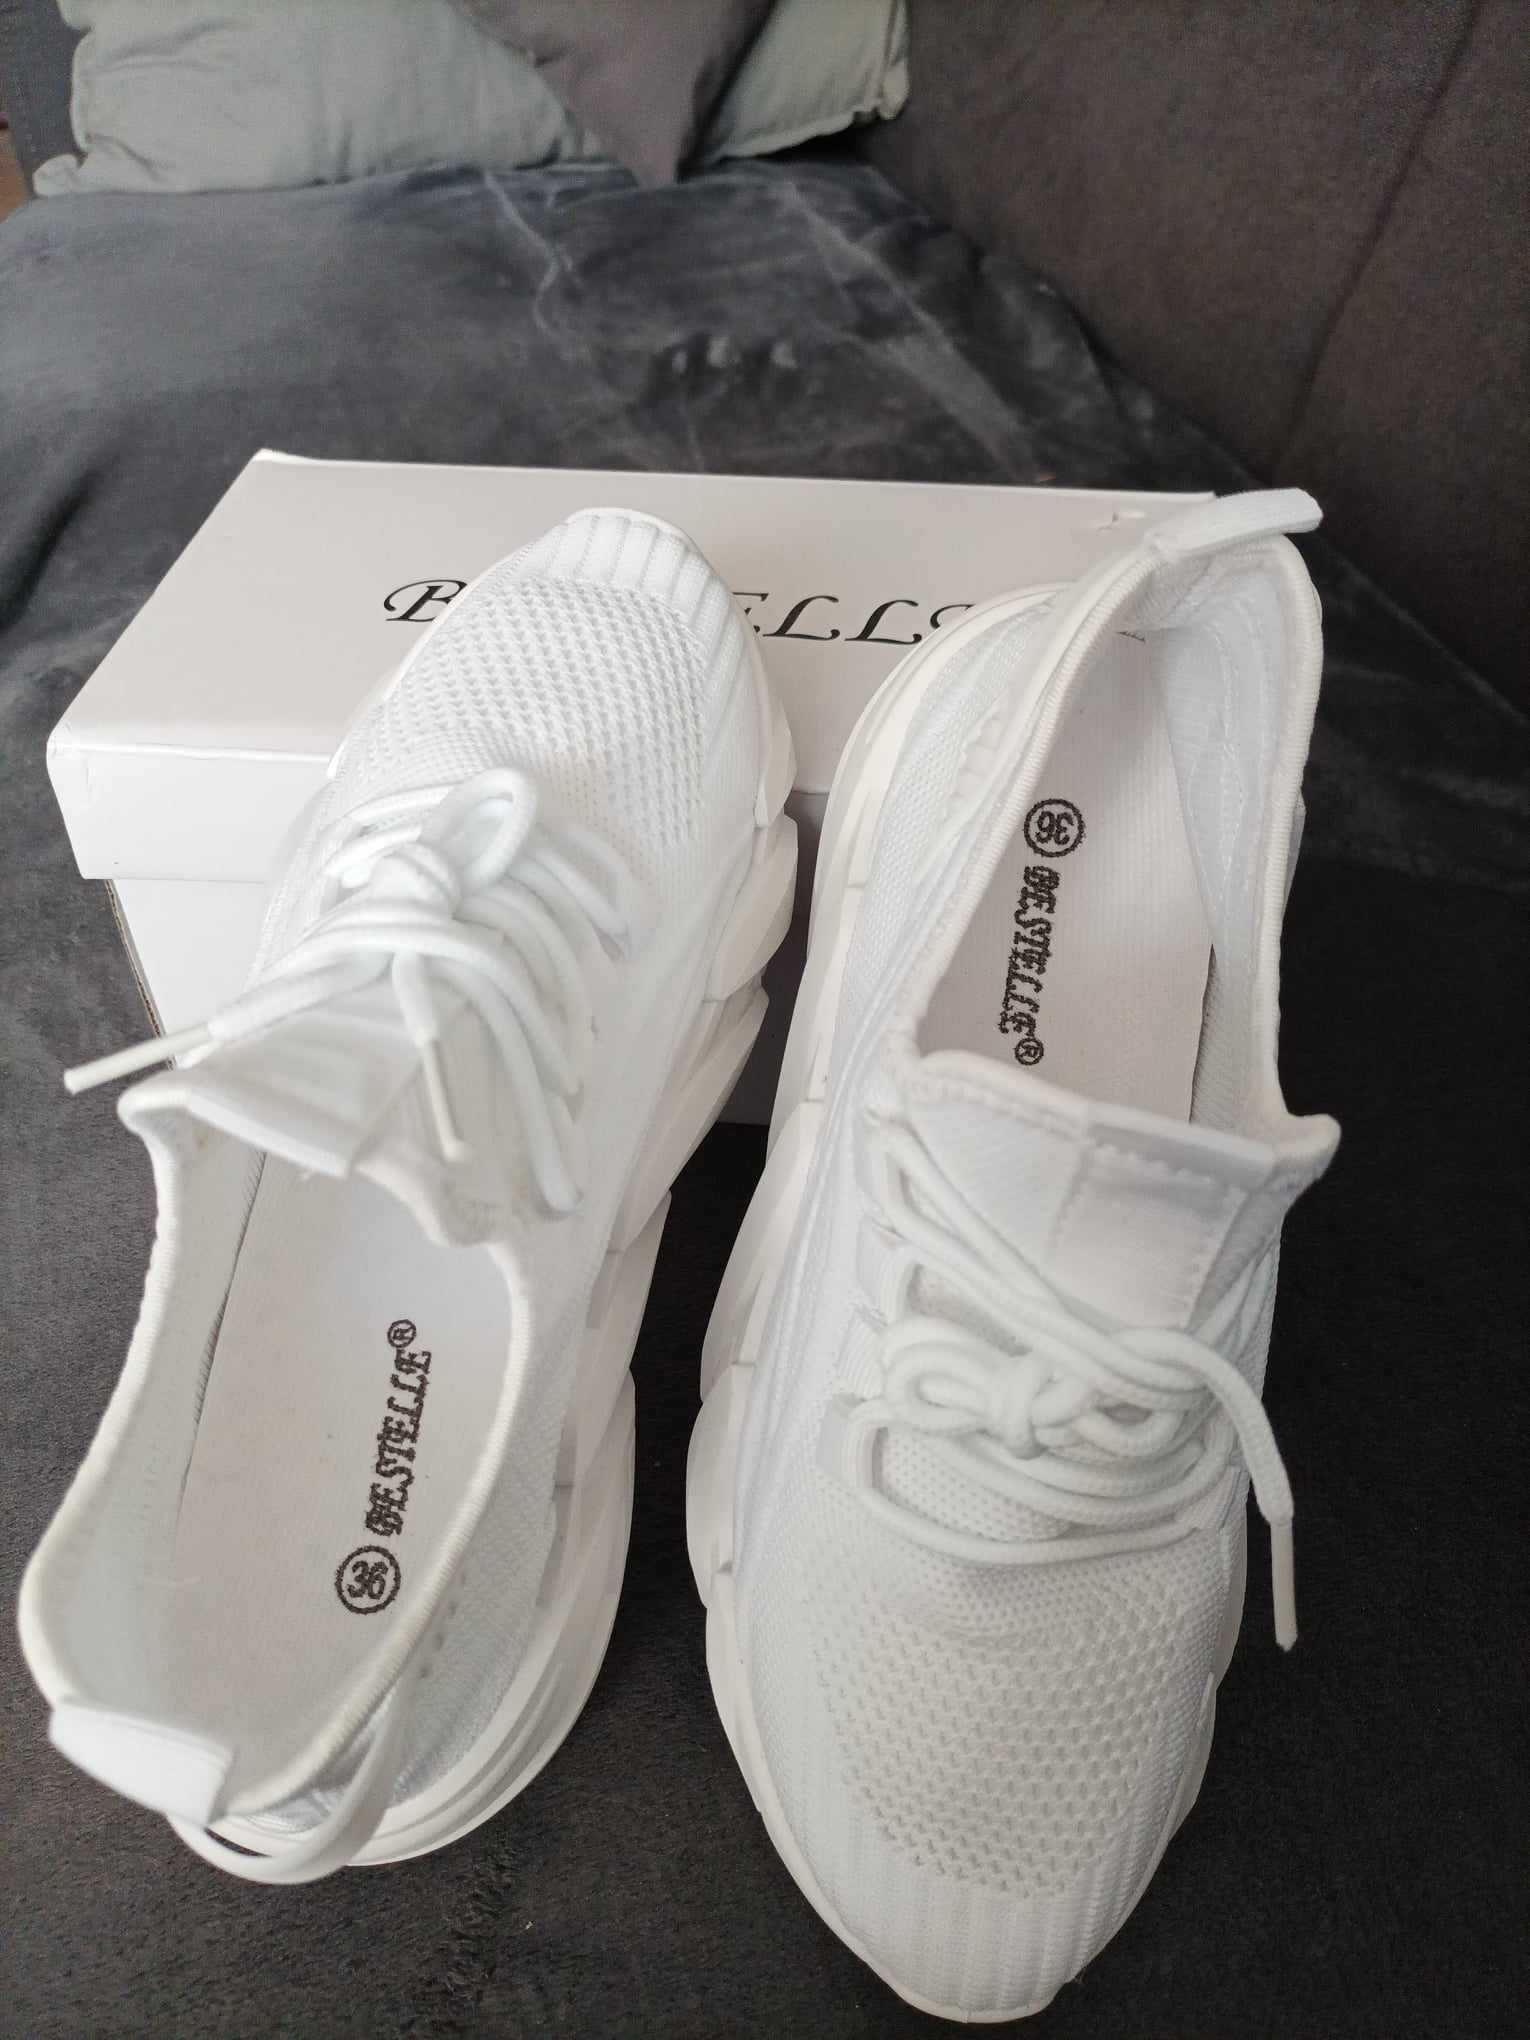 Buty sportowe damskie sneakersy białe, skarpetowe.